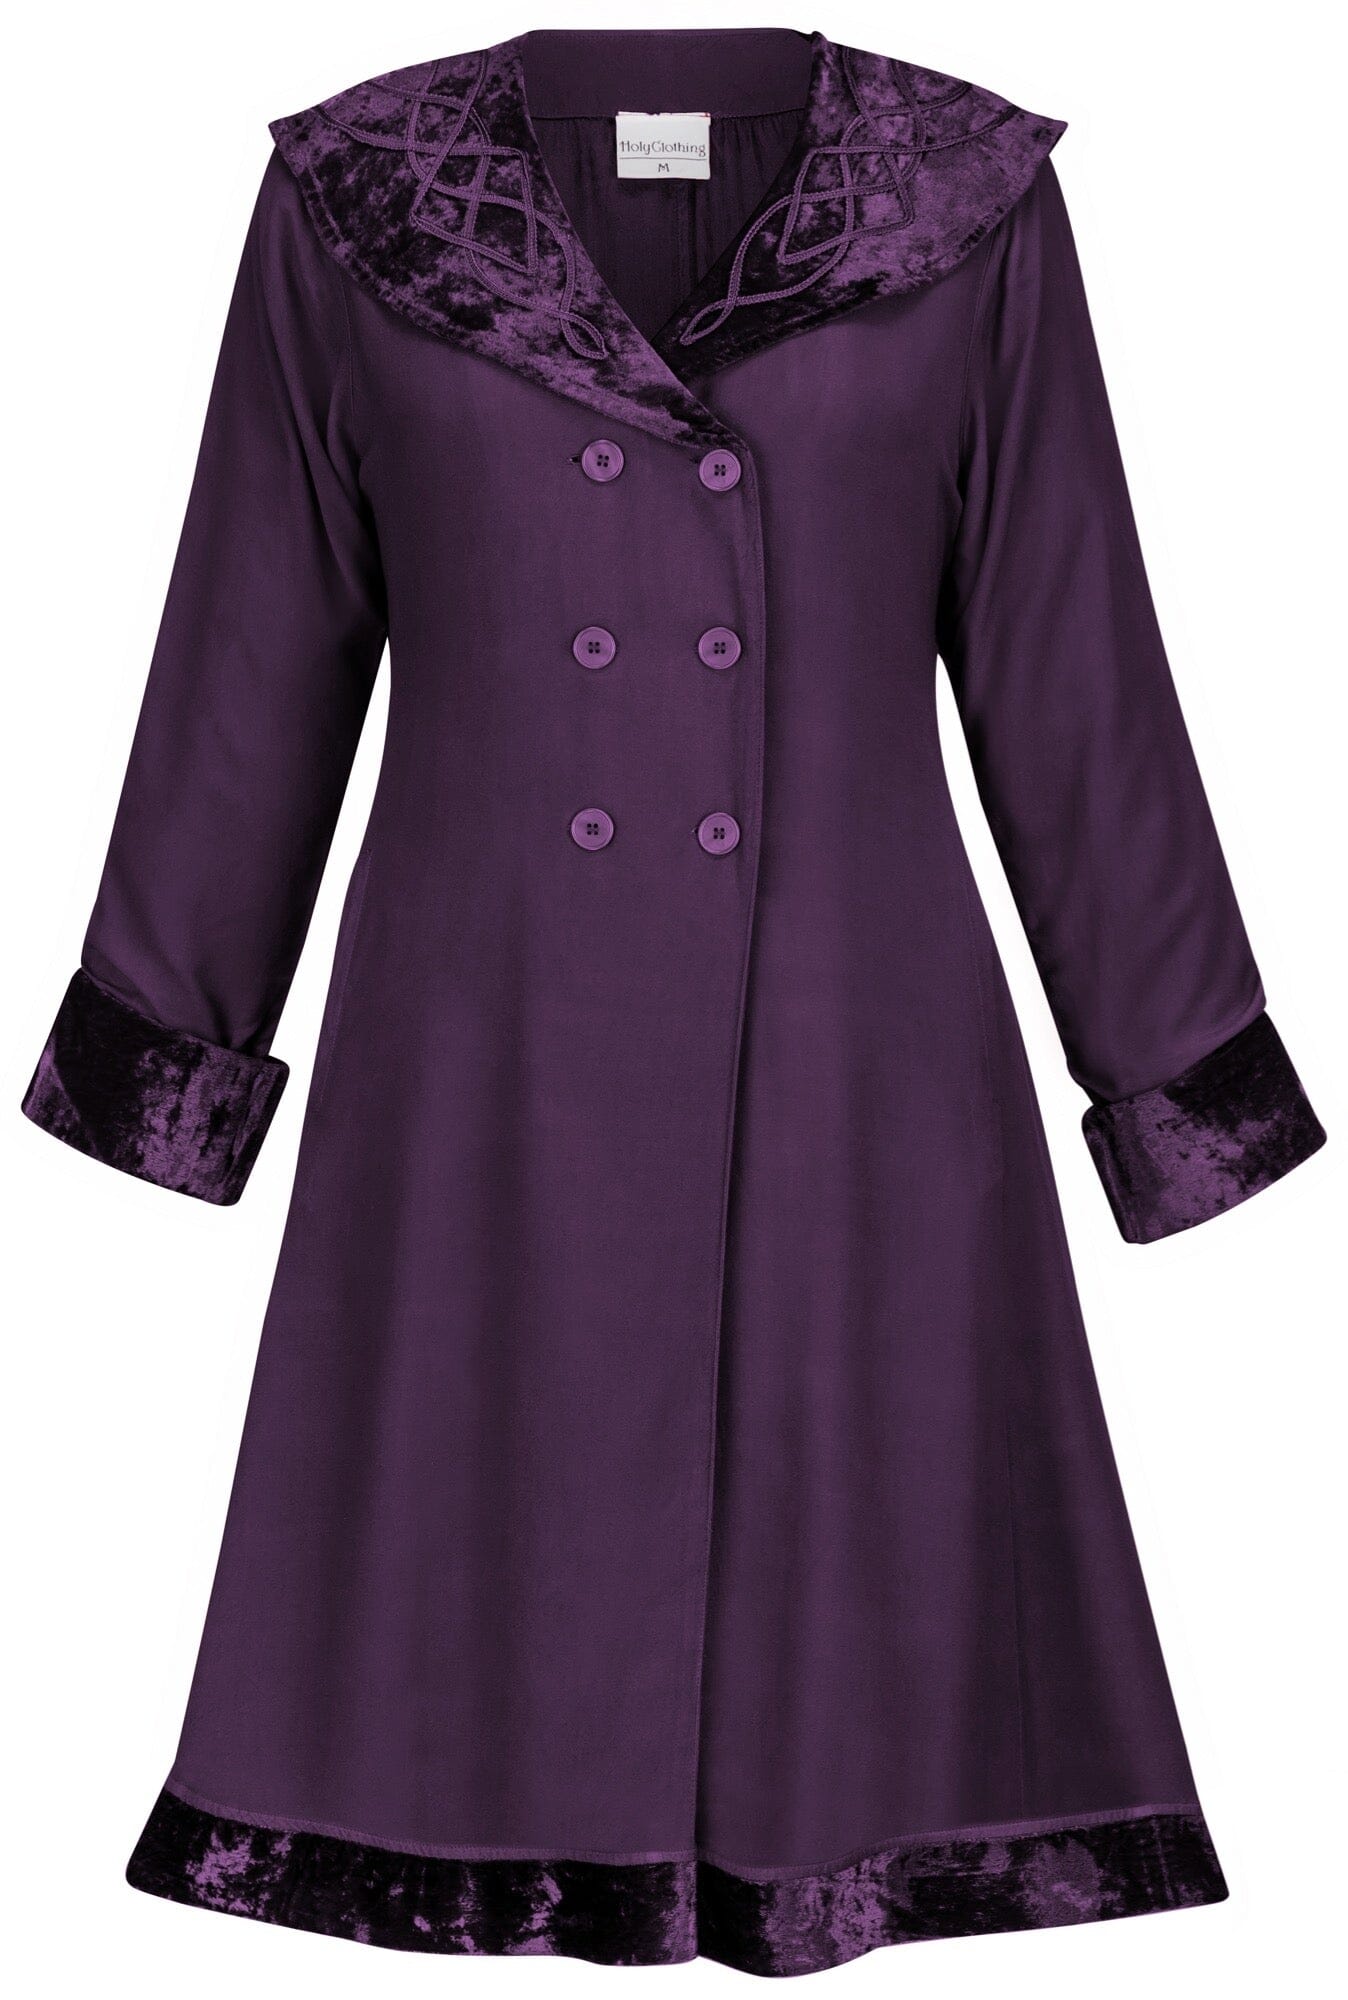 Kelly Coat Limited Edition Mystic Purple